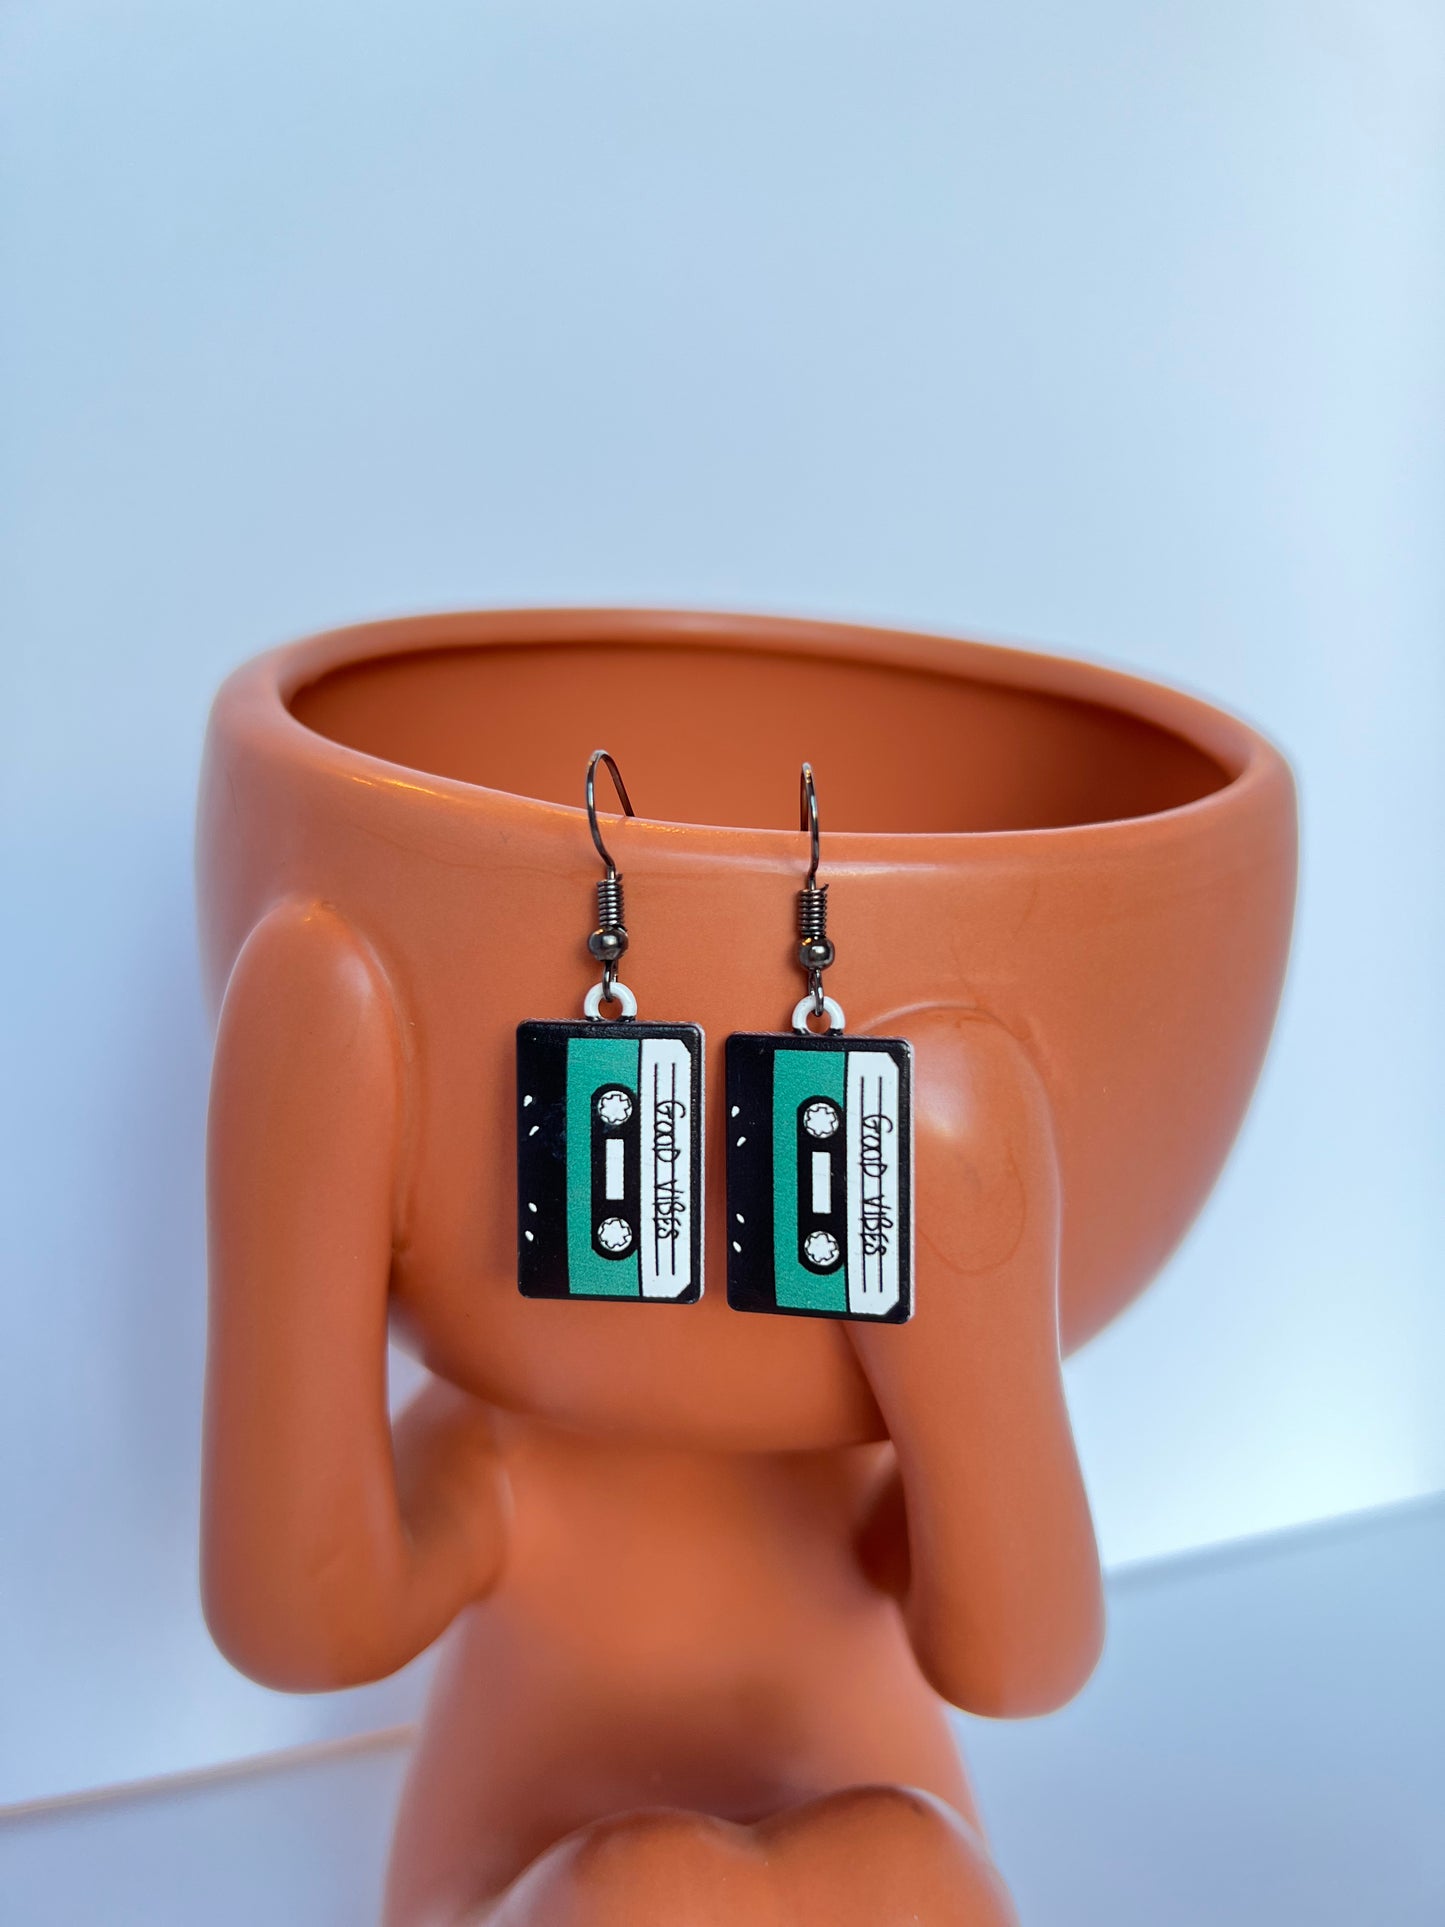 Retro "Good Vibes" Cassette Tape Earrings | Quirky Earrings